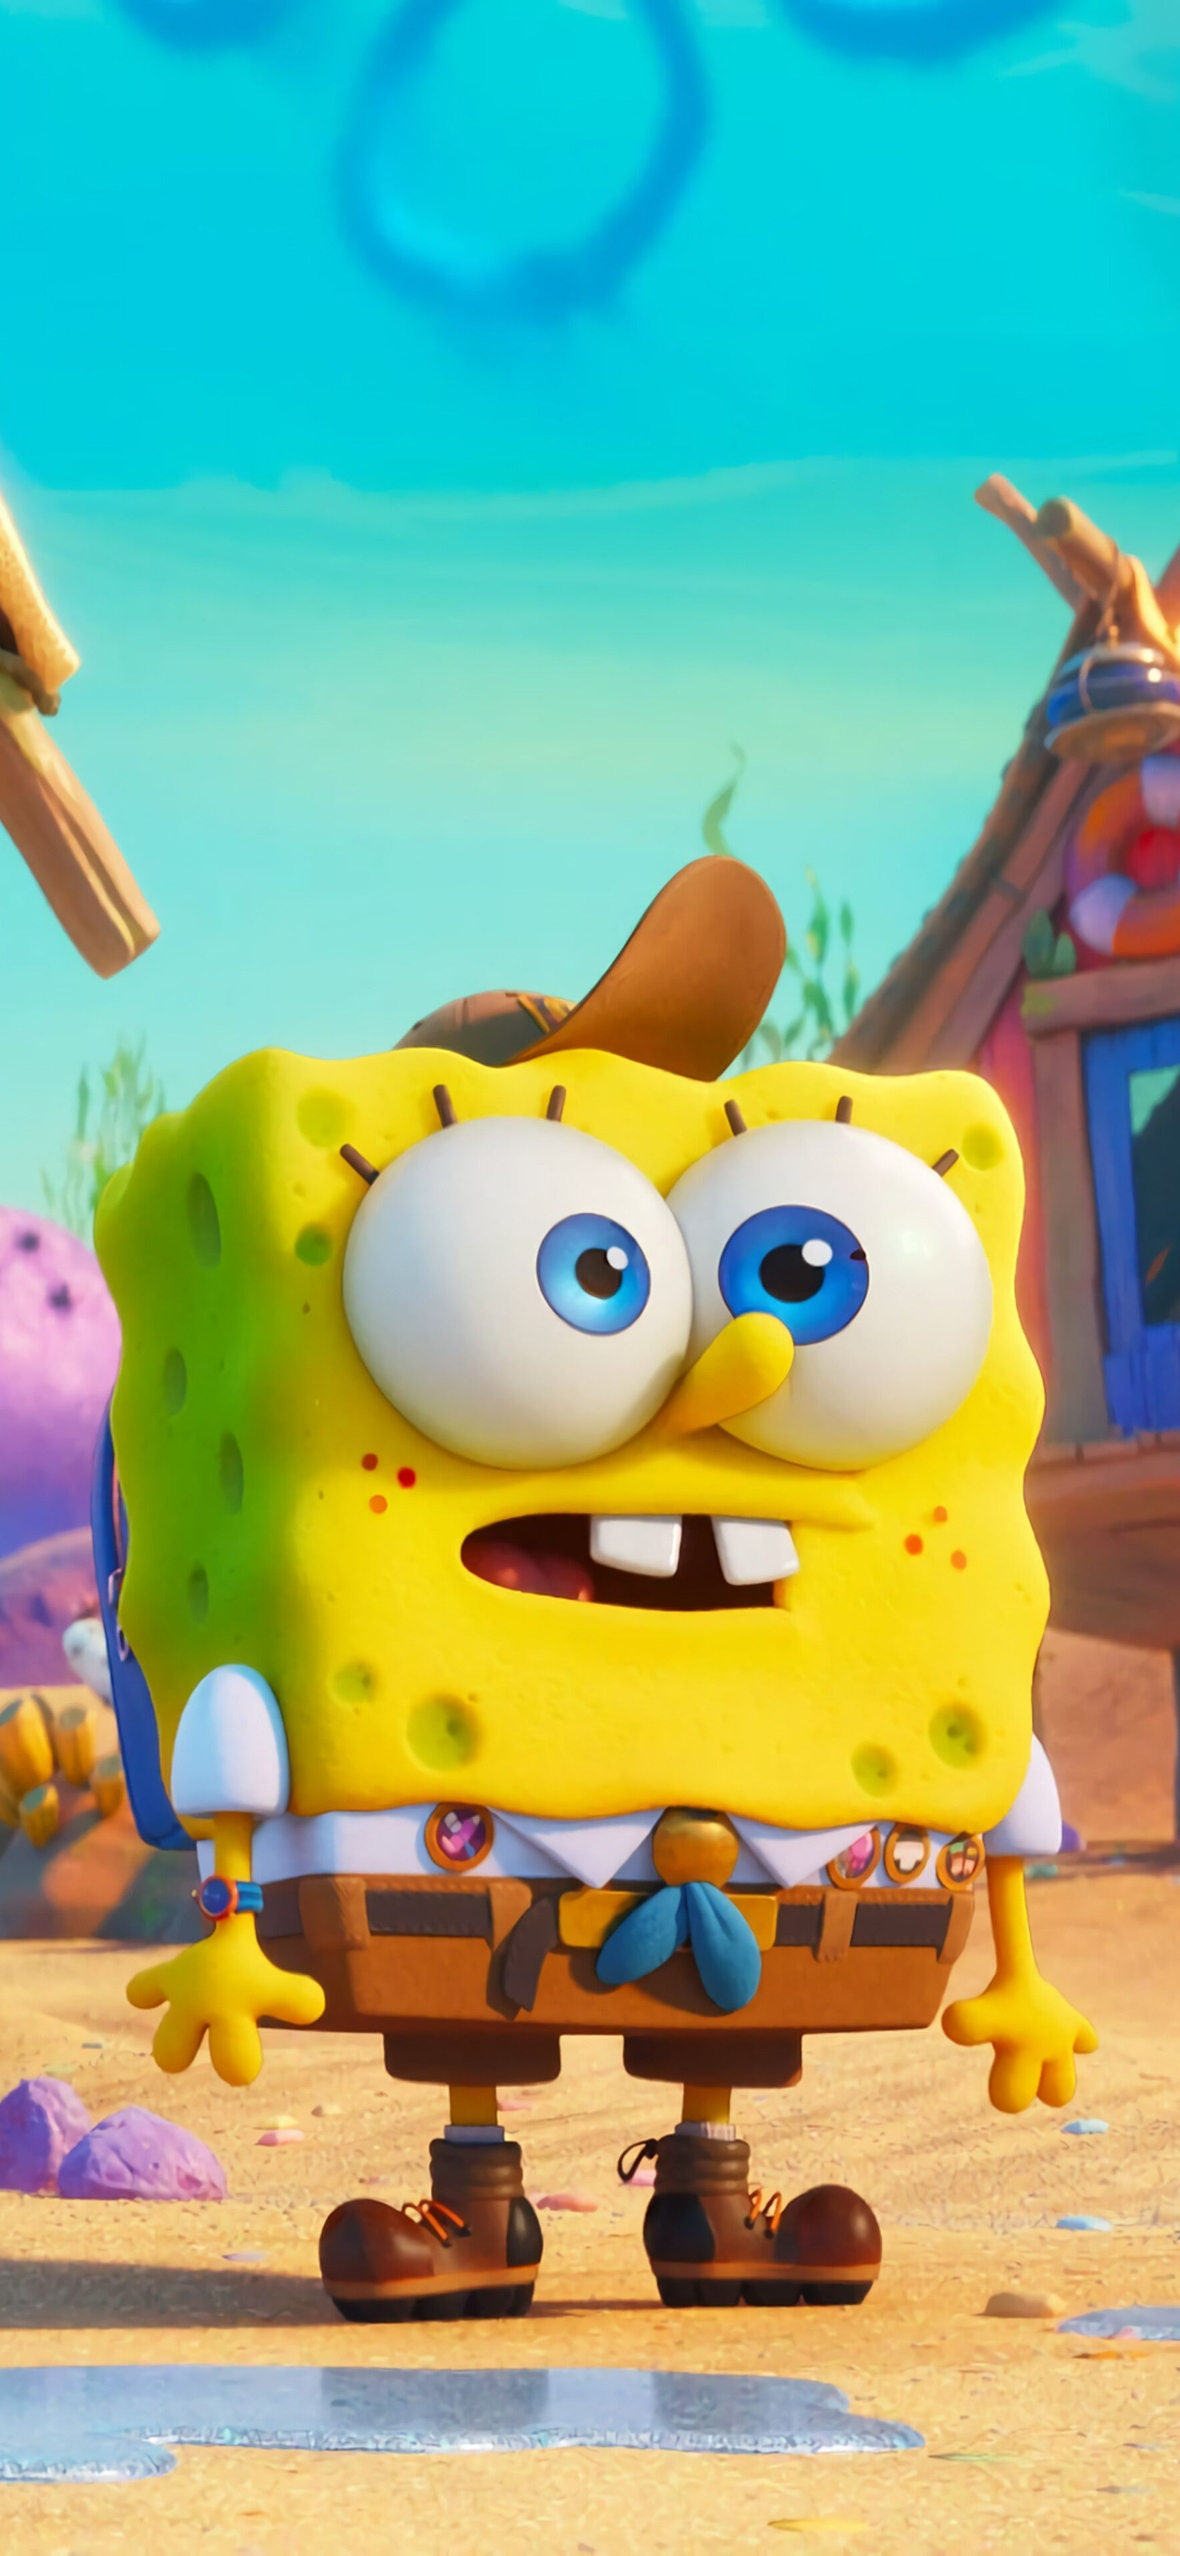 Spongebob Squarepants Home Screen Wallpaper